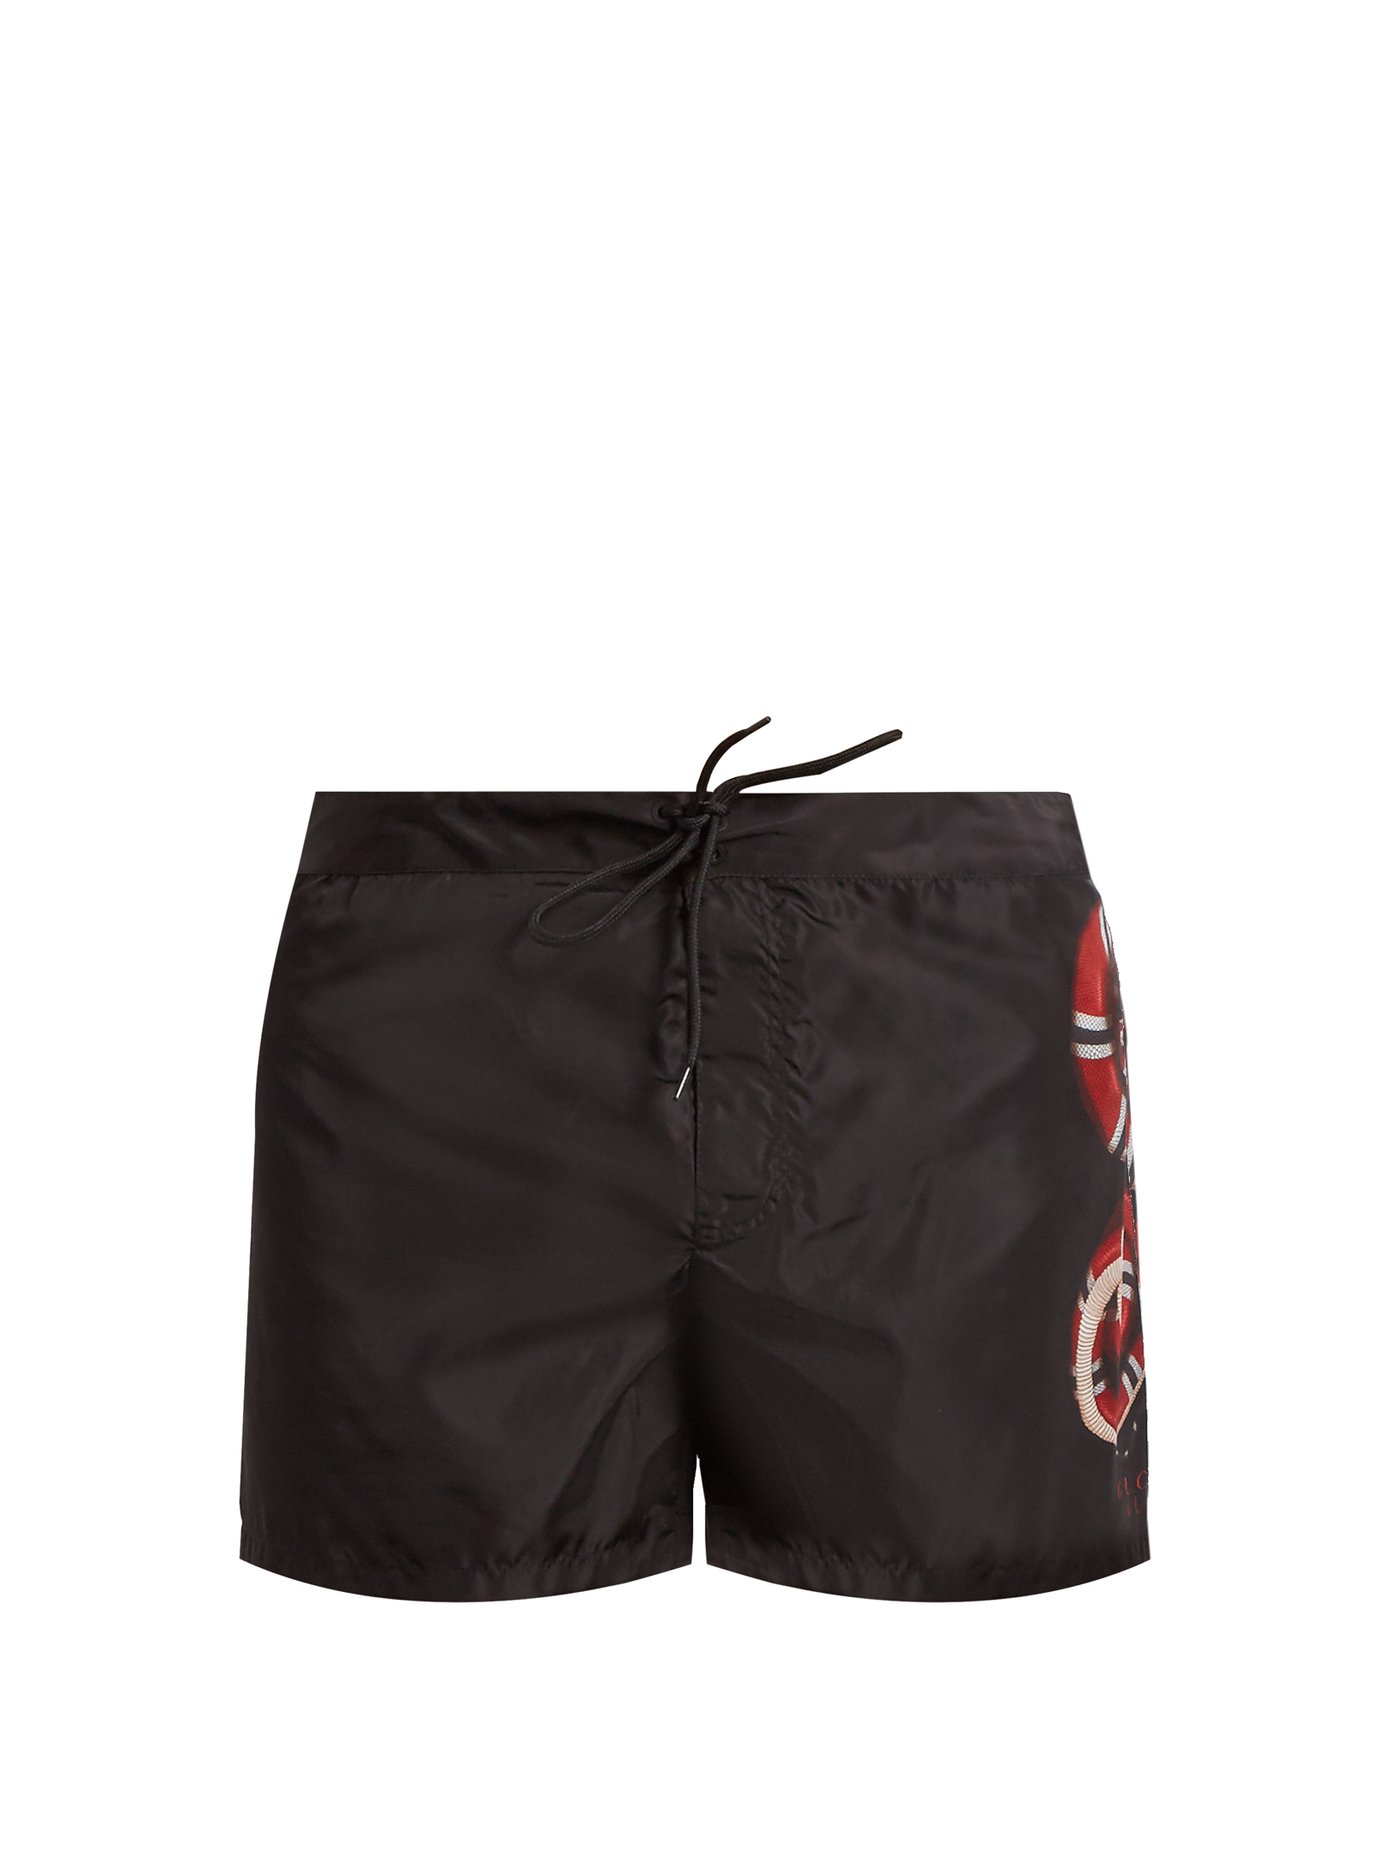 gucci swim shorts ebay